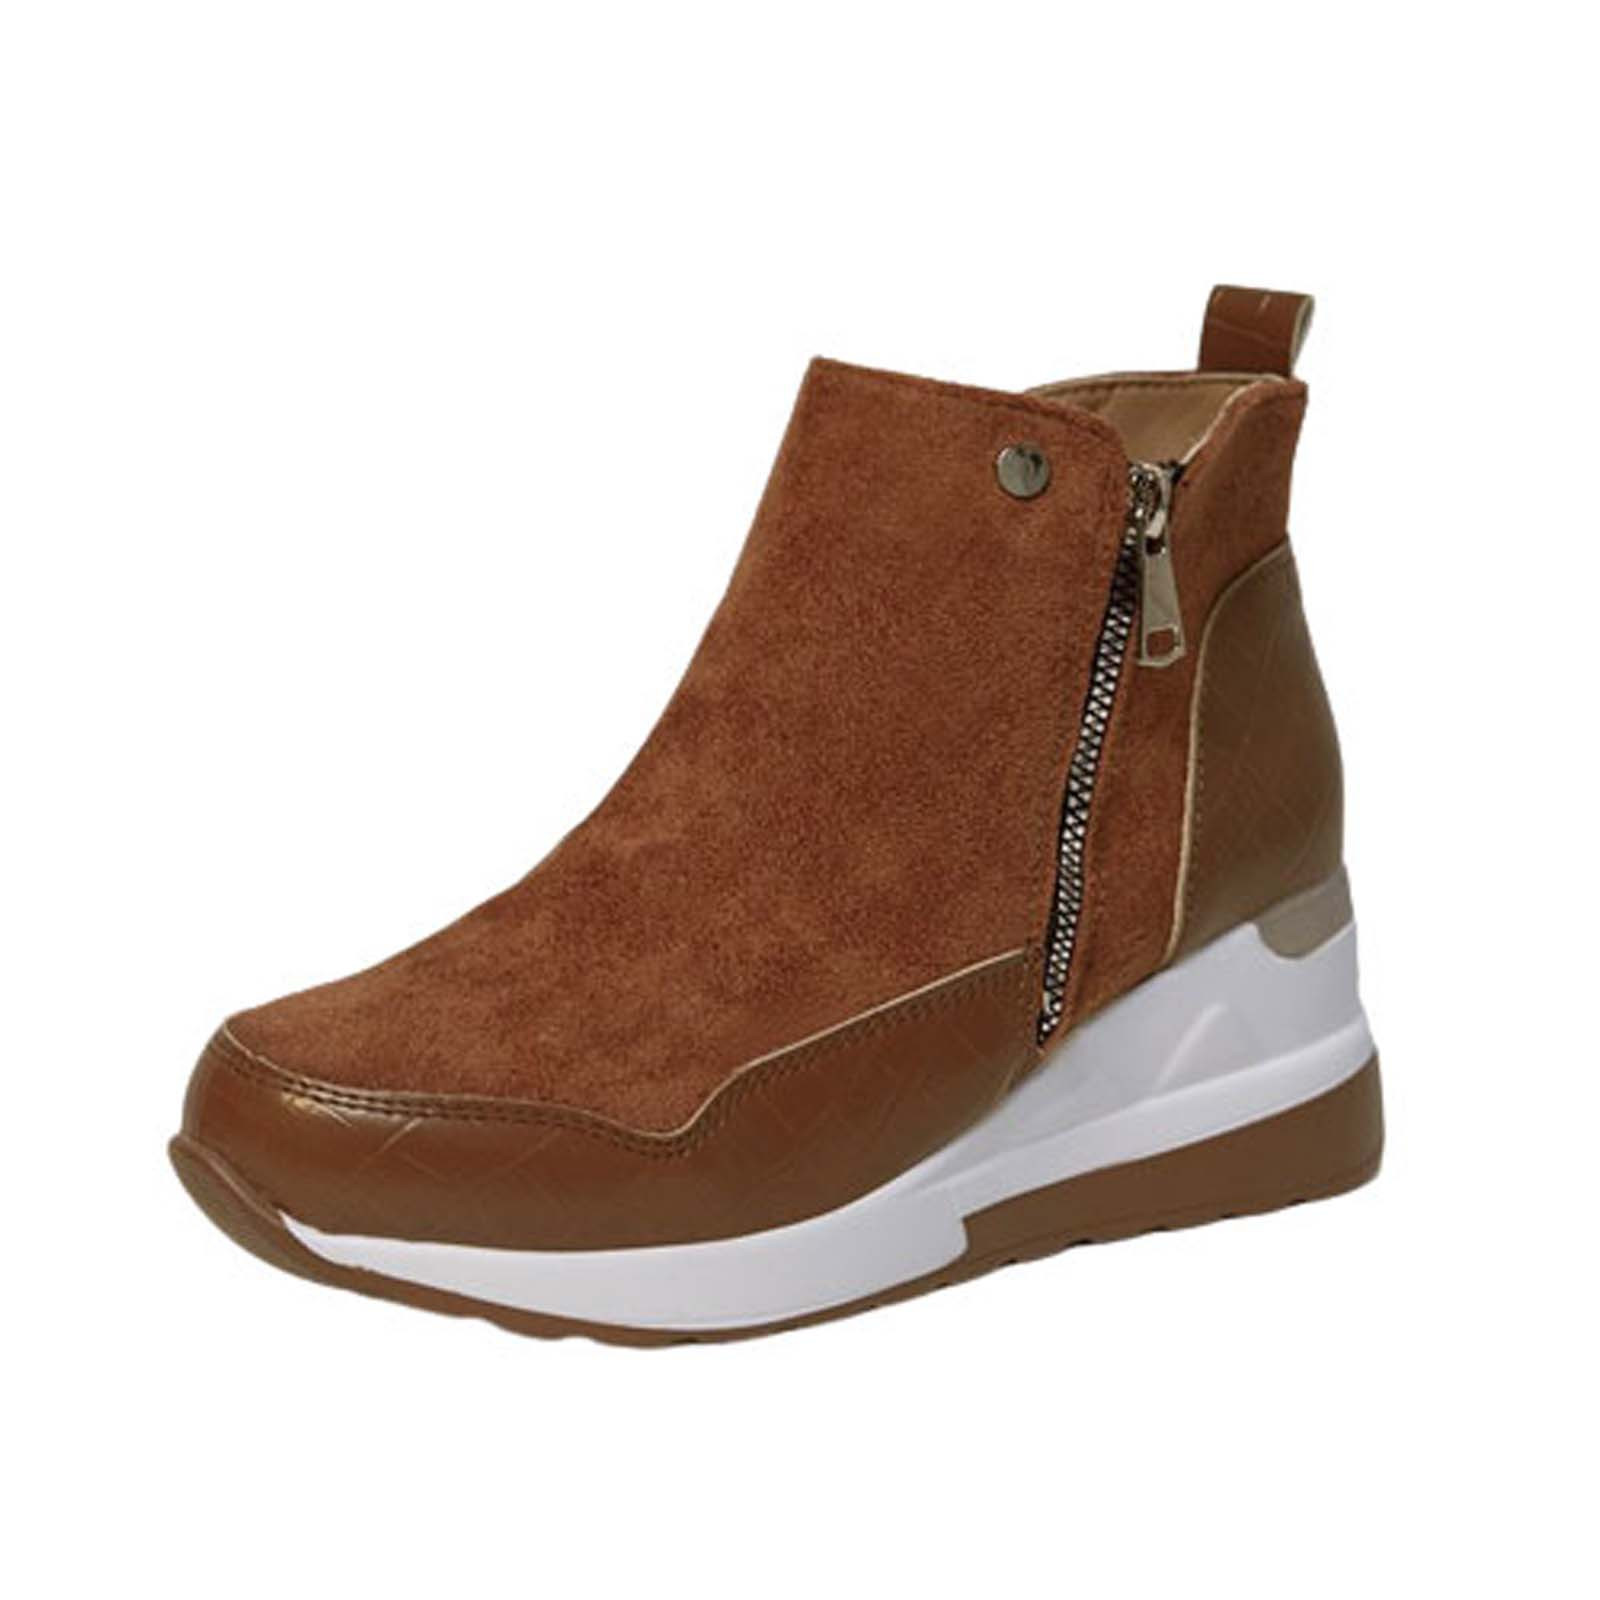 Hvyesh Women Platform Wedge Sneakers Slip On Comfort Shoes Casual ...